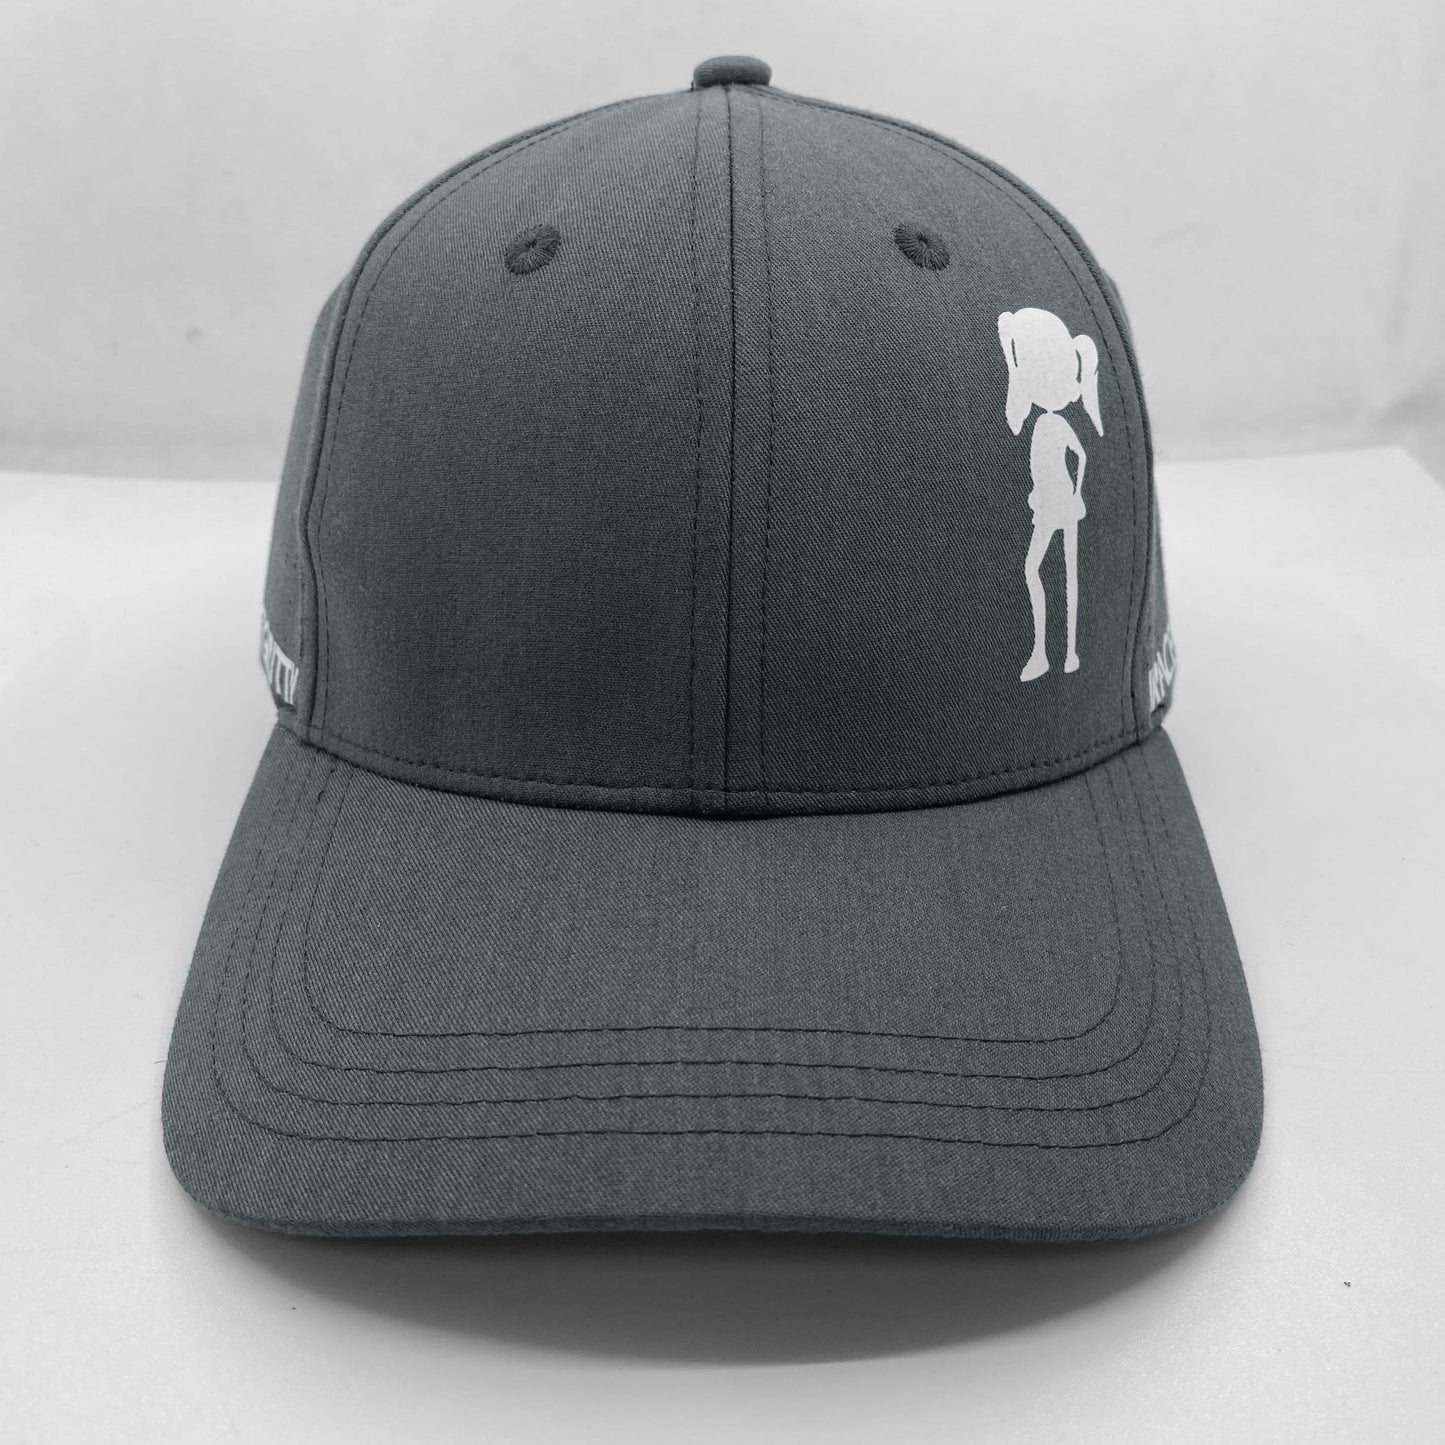 Mesh Baseball Hat - two color options